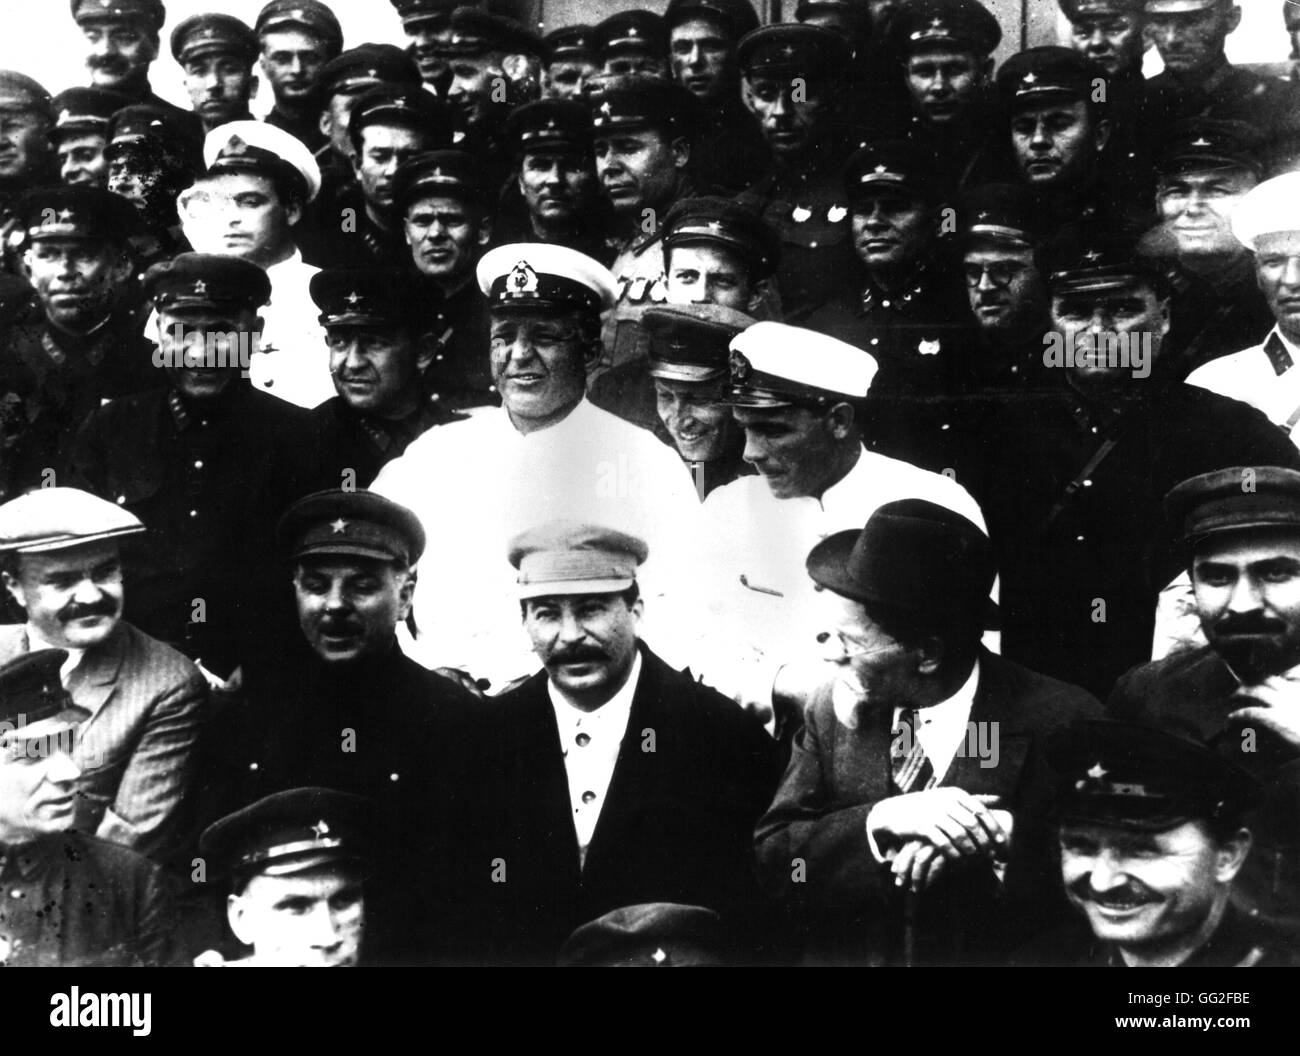 Joseph Stalin (middle), Molotov, (far left). Voroshilov next to Stalin. Kalinin on his right. 20th century U.S.S.R. Stock Photo